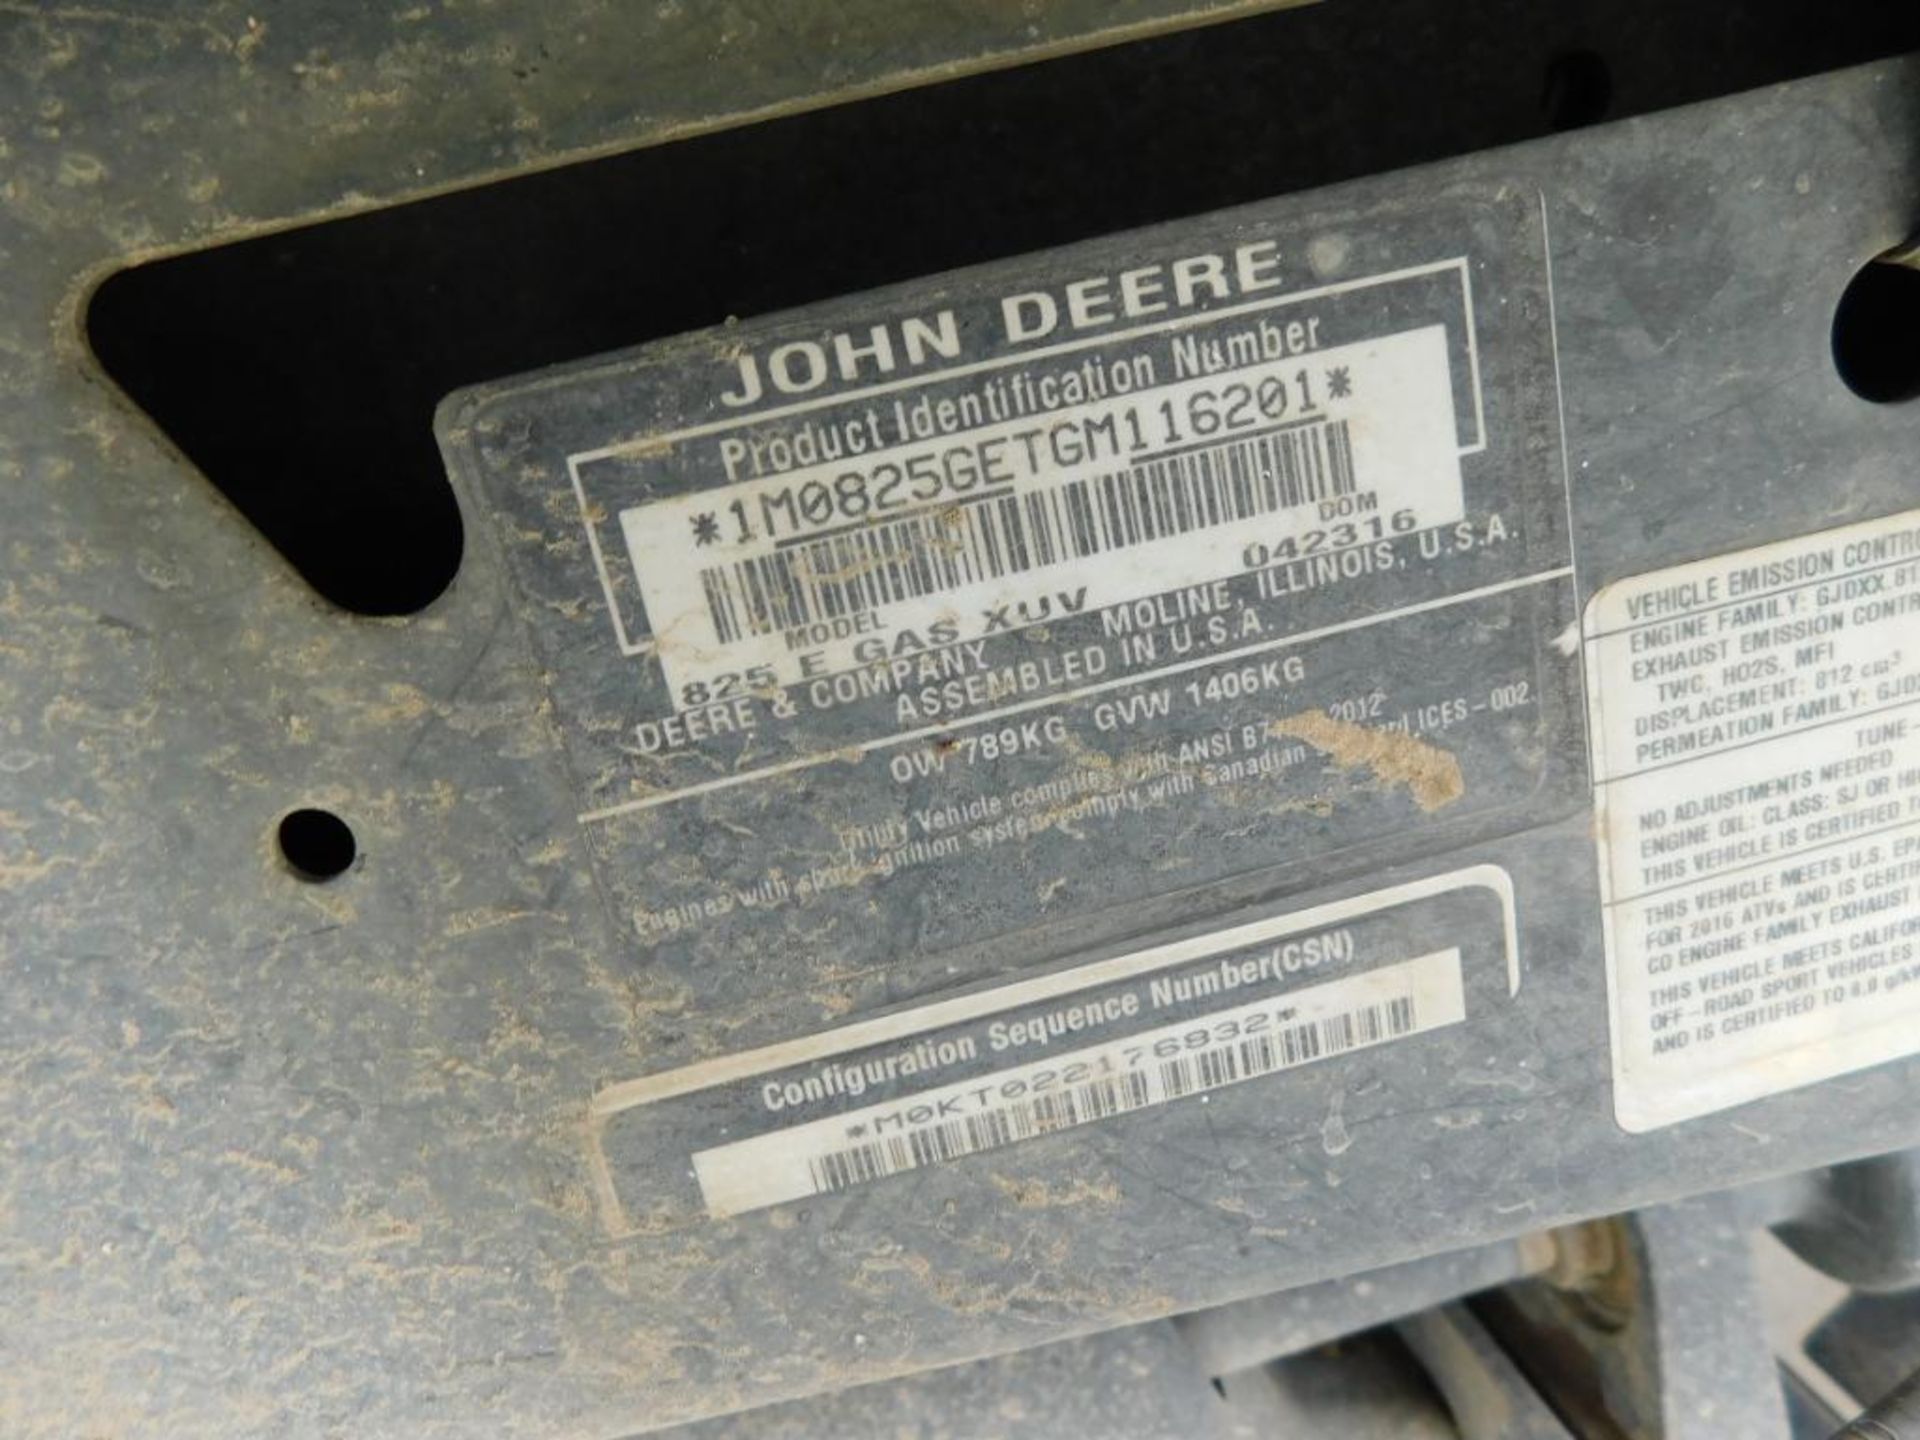 John Deer 825E 4-Wheel Drive Gator Dump Bed w/Orchard Spraying System, 12CC Gasoline Power, S/N 1M08 - Image 7 of 7